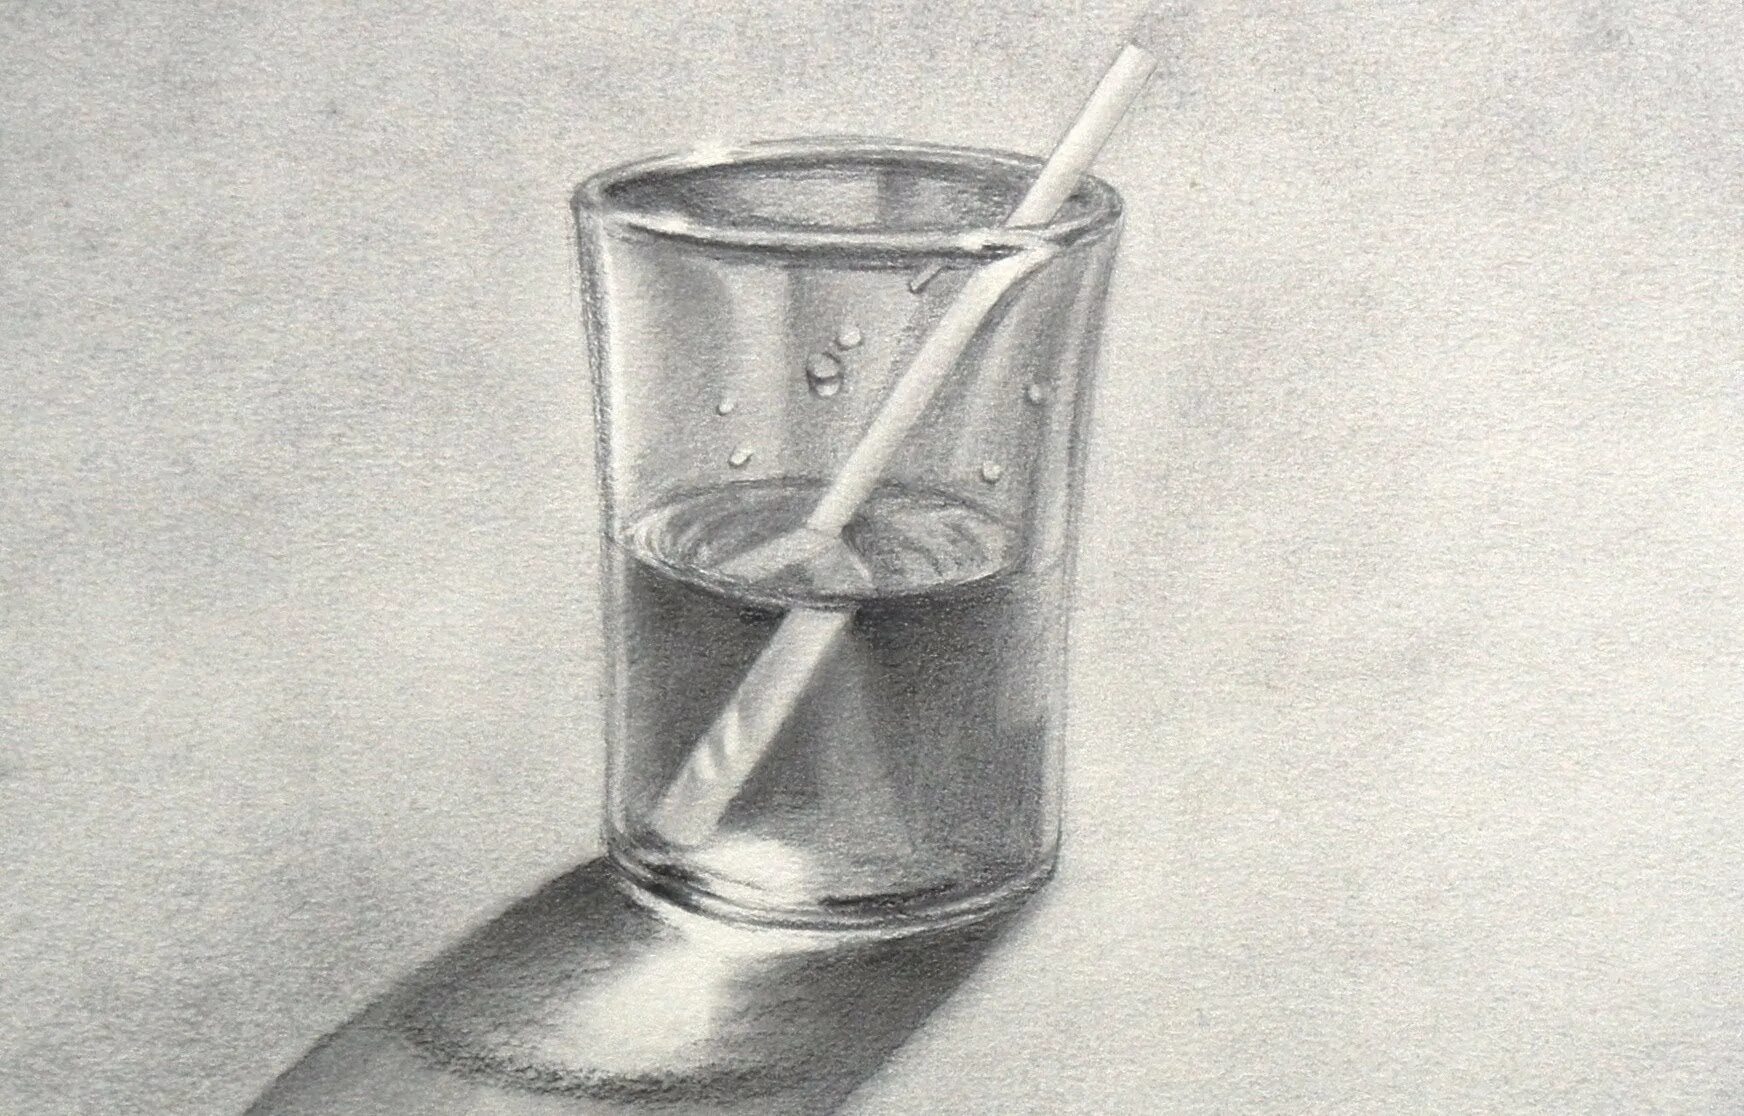 Стакан воды карандашом. Стеклянный стакан карандашом. Натюрморт со стеклом карандашом. Стеклянные предметы карандашом. Наброски карандашом предметы.